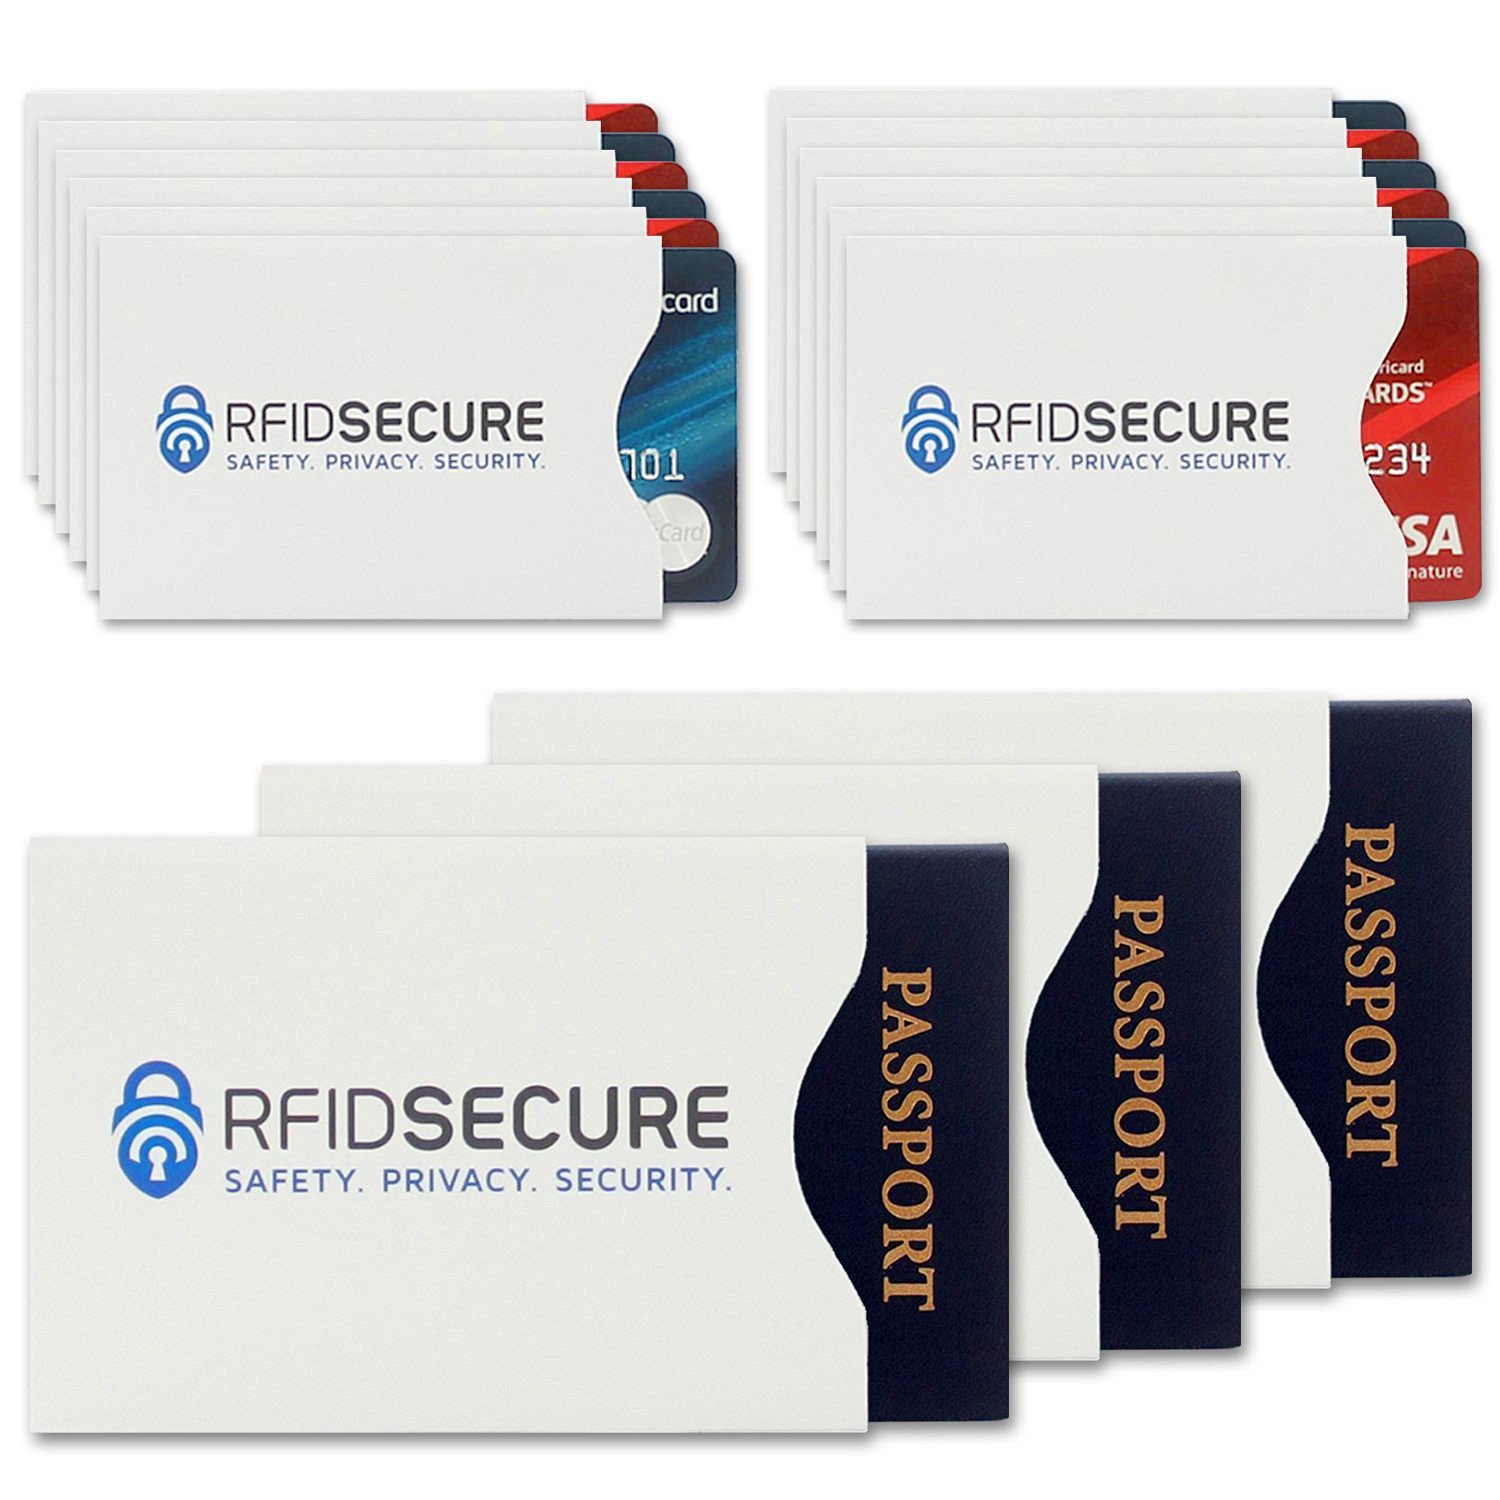 Cards Protection Blocking Sleeve Card Holder RFID Blocker Protect